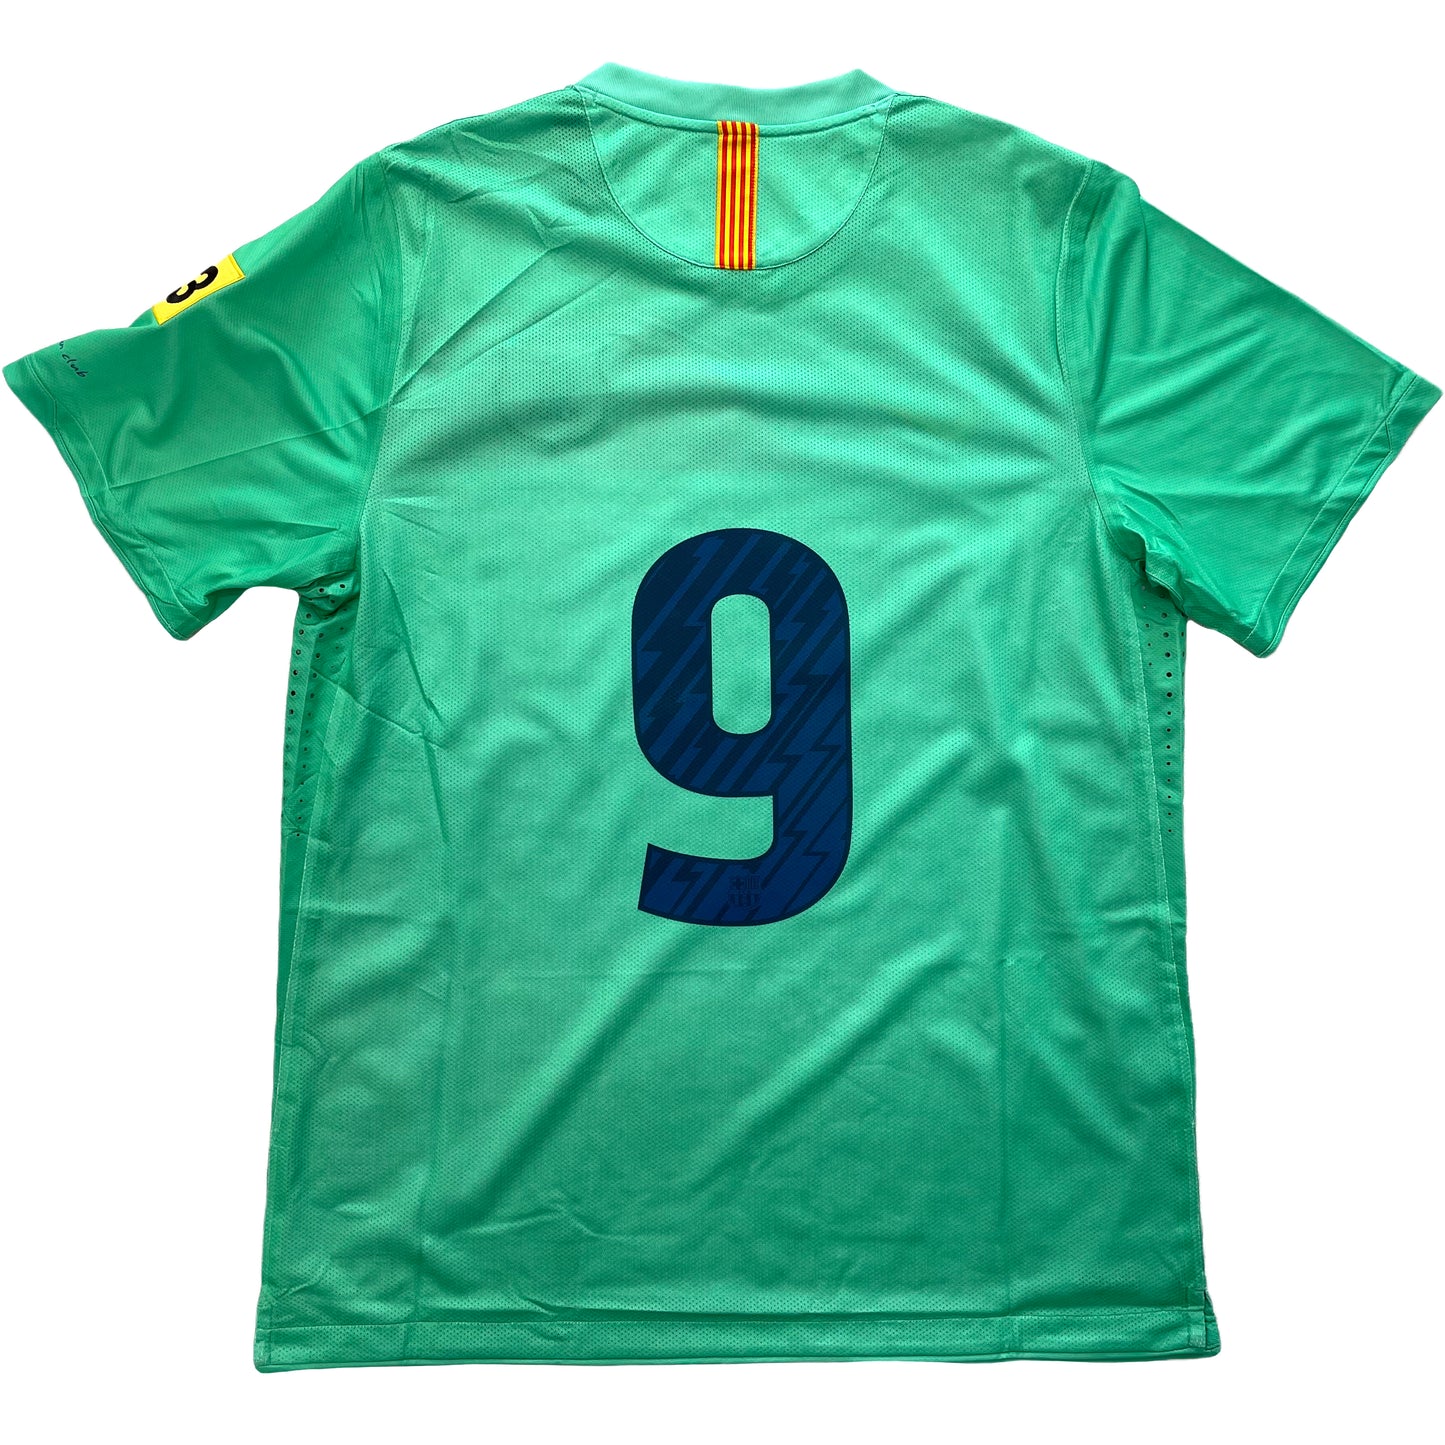 <tc>2010-2011 FC Barcelona pretemporada Player Issue camiseta visitante #9 Ibrahimovic (XL)</tc>